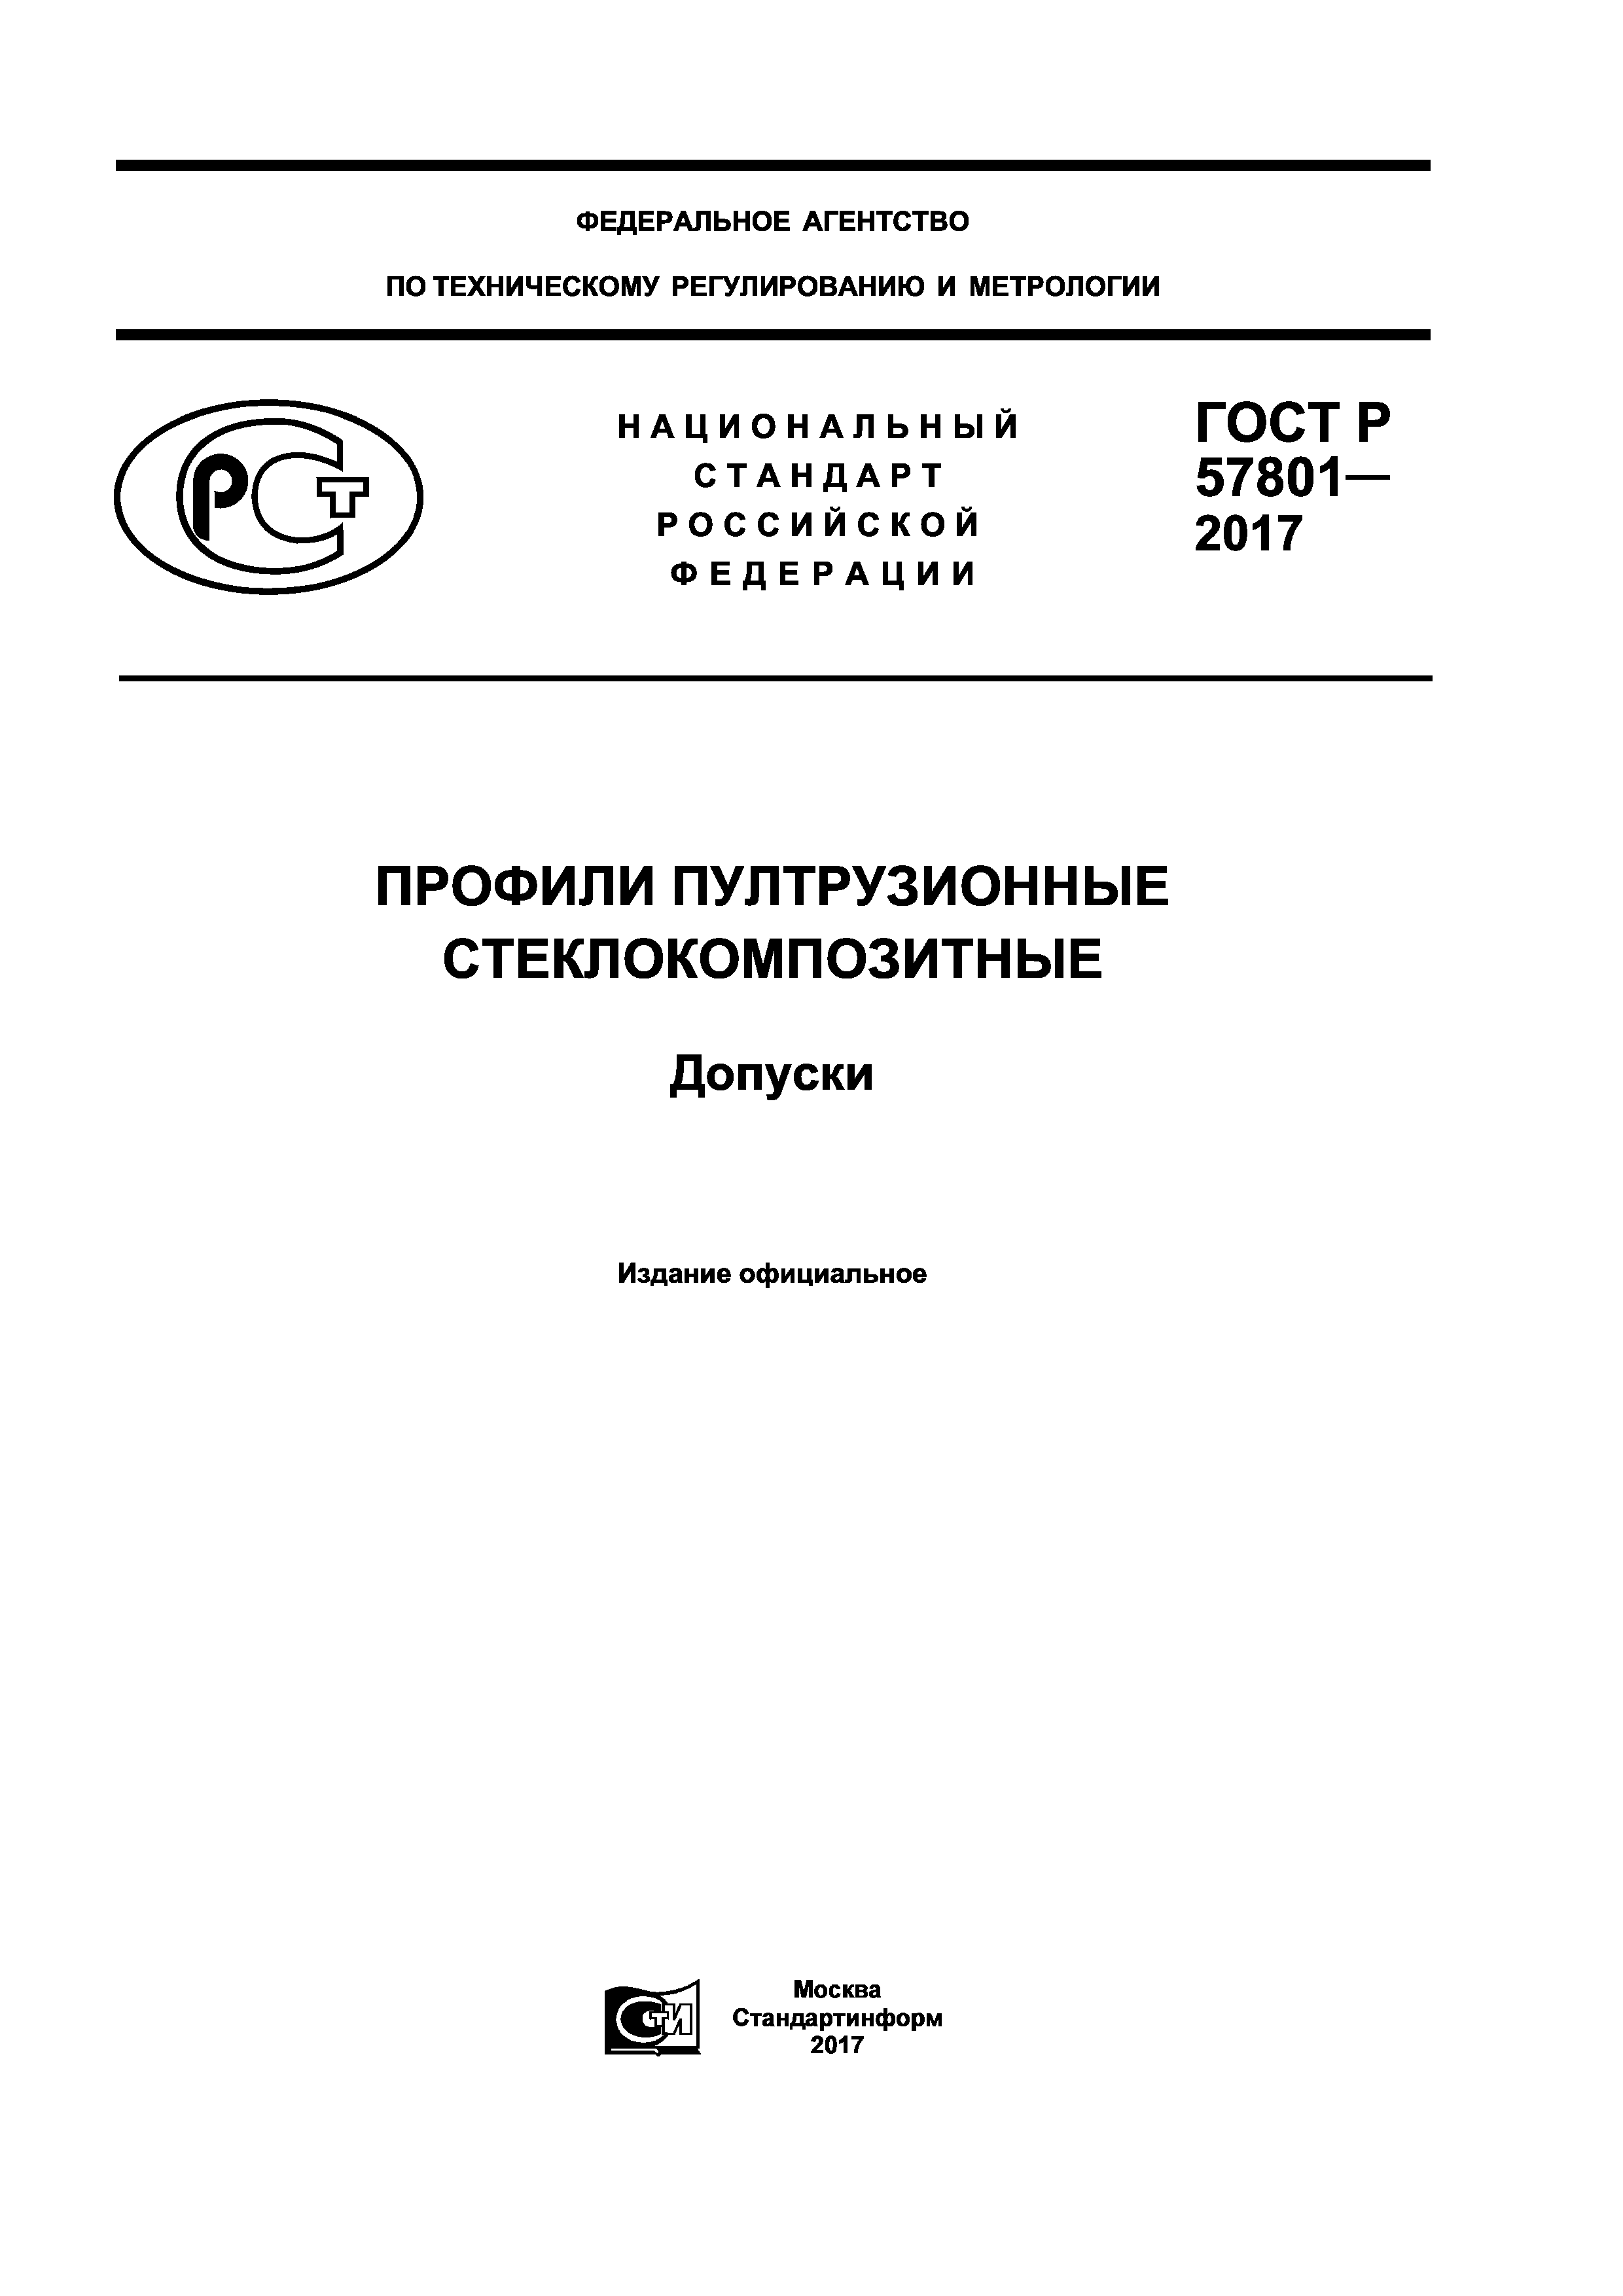 ГОСТ Р 57801-2017